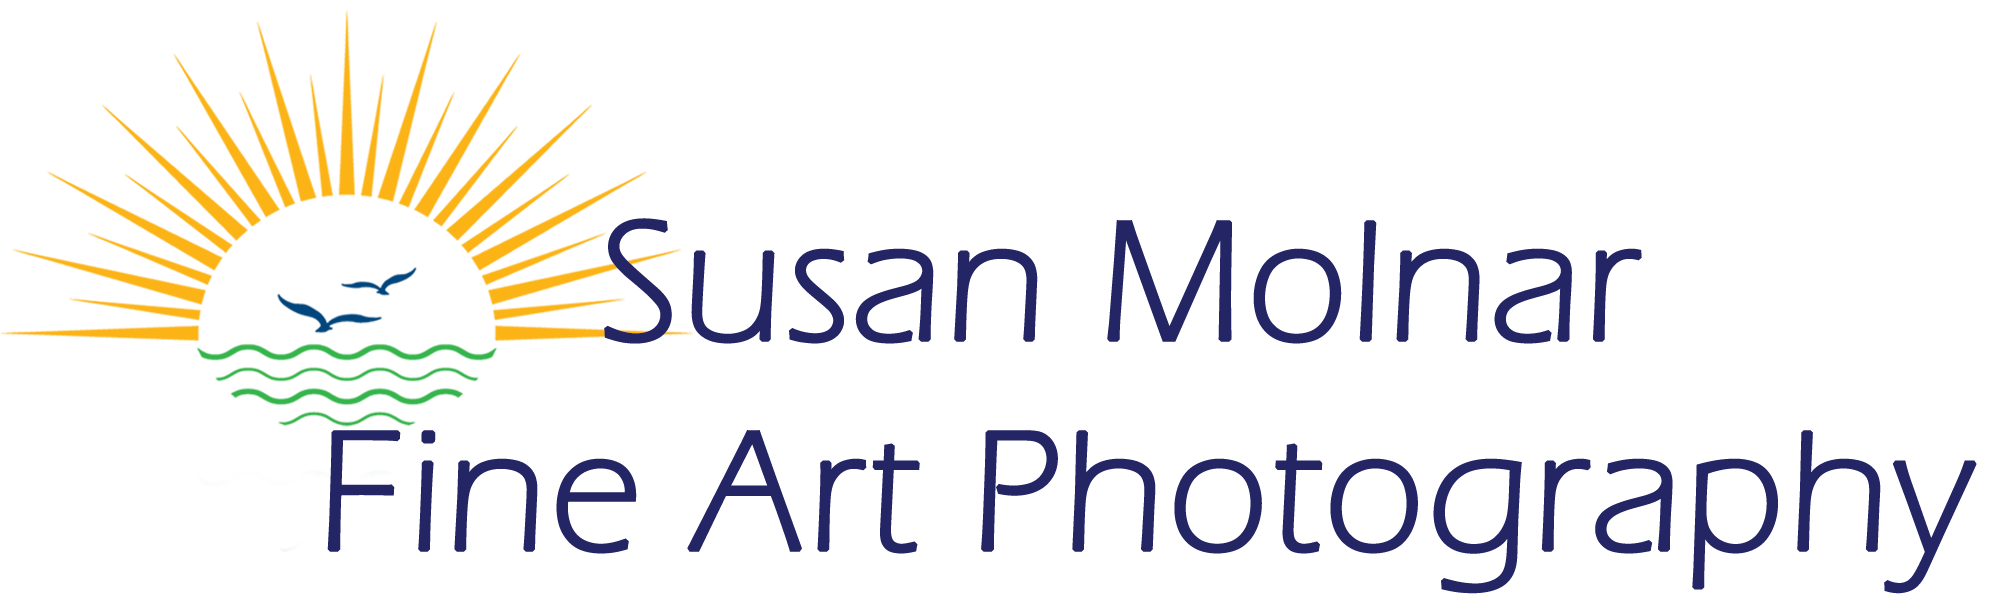 Susan Molnar - Website